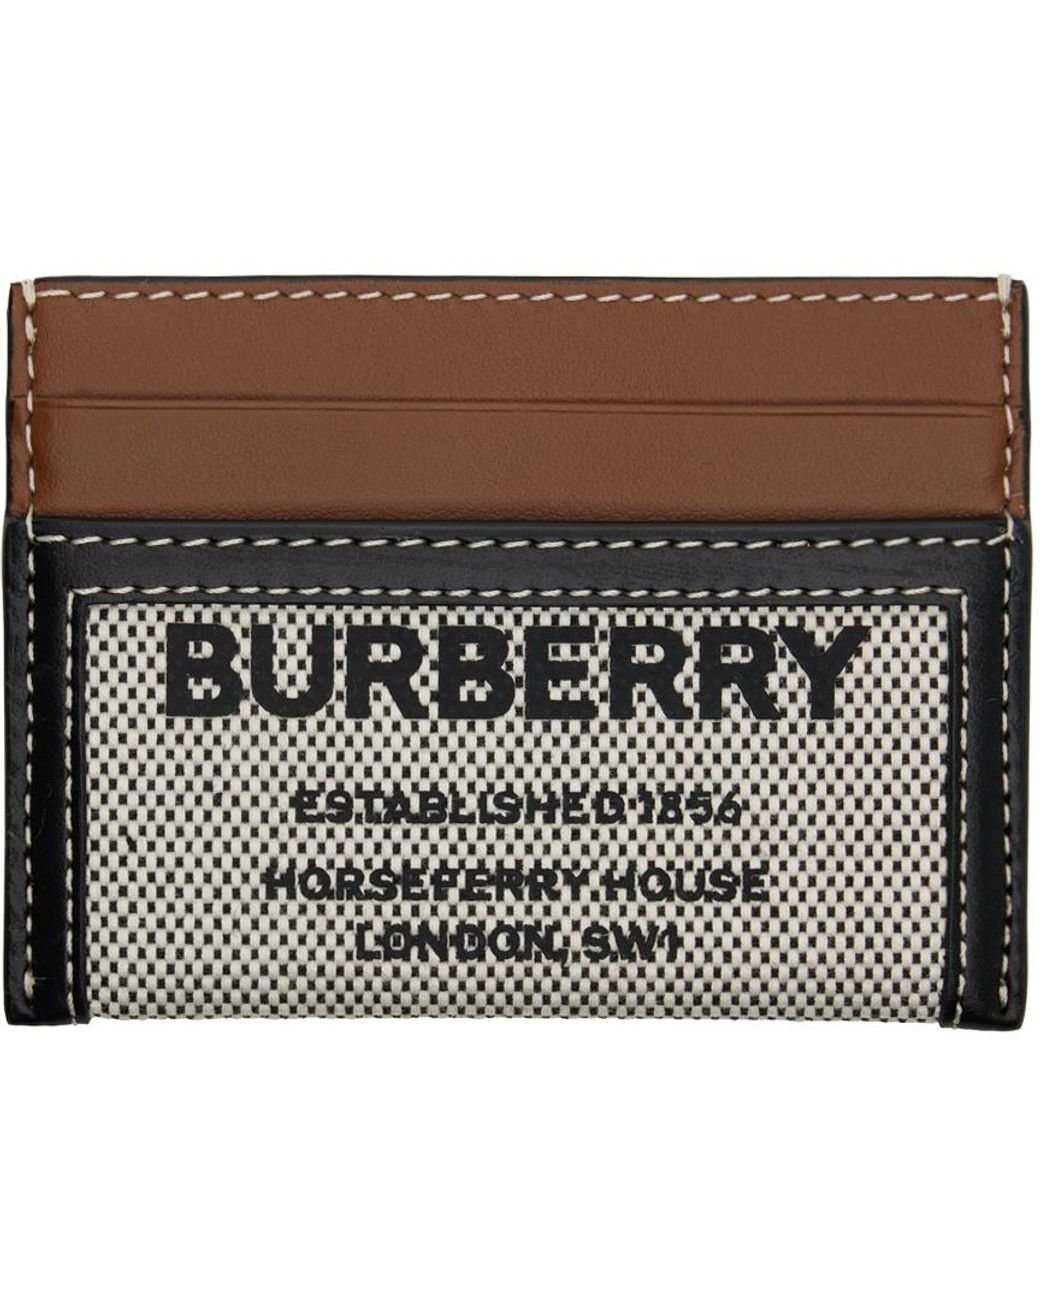 burberry card holder wallet